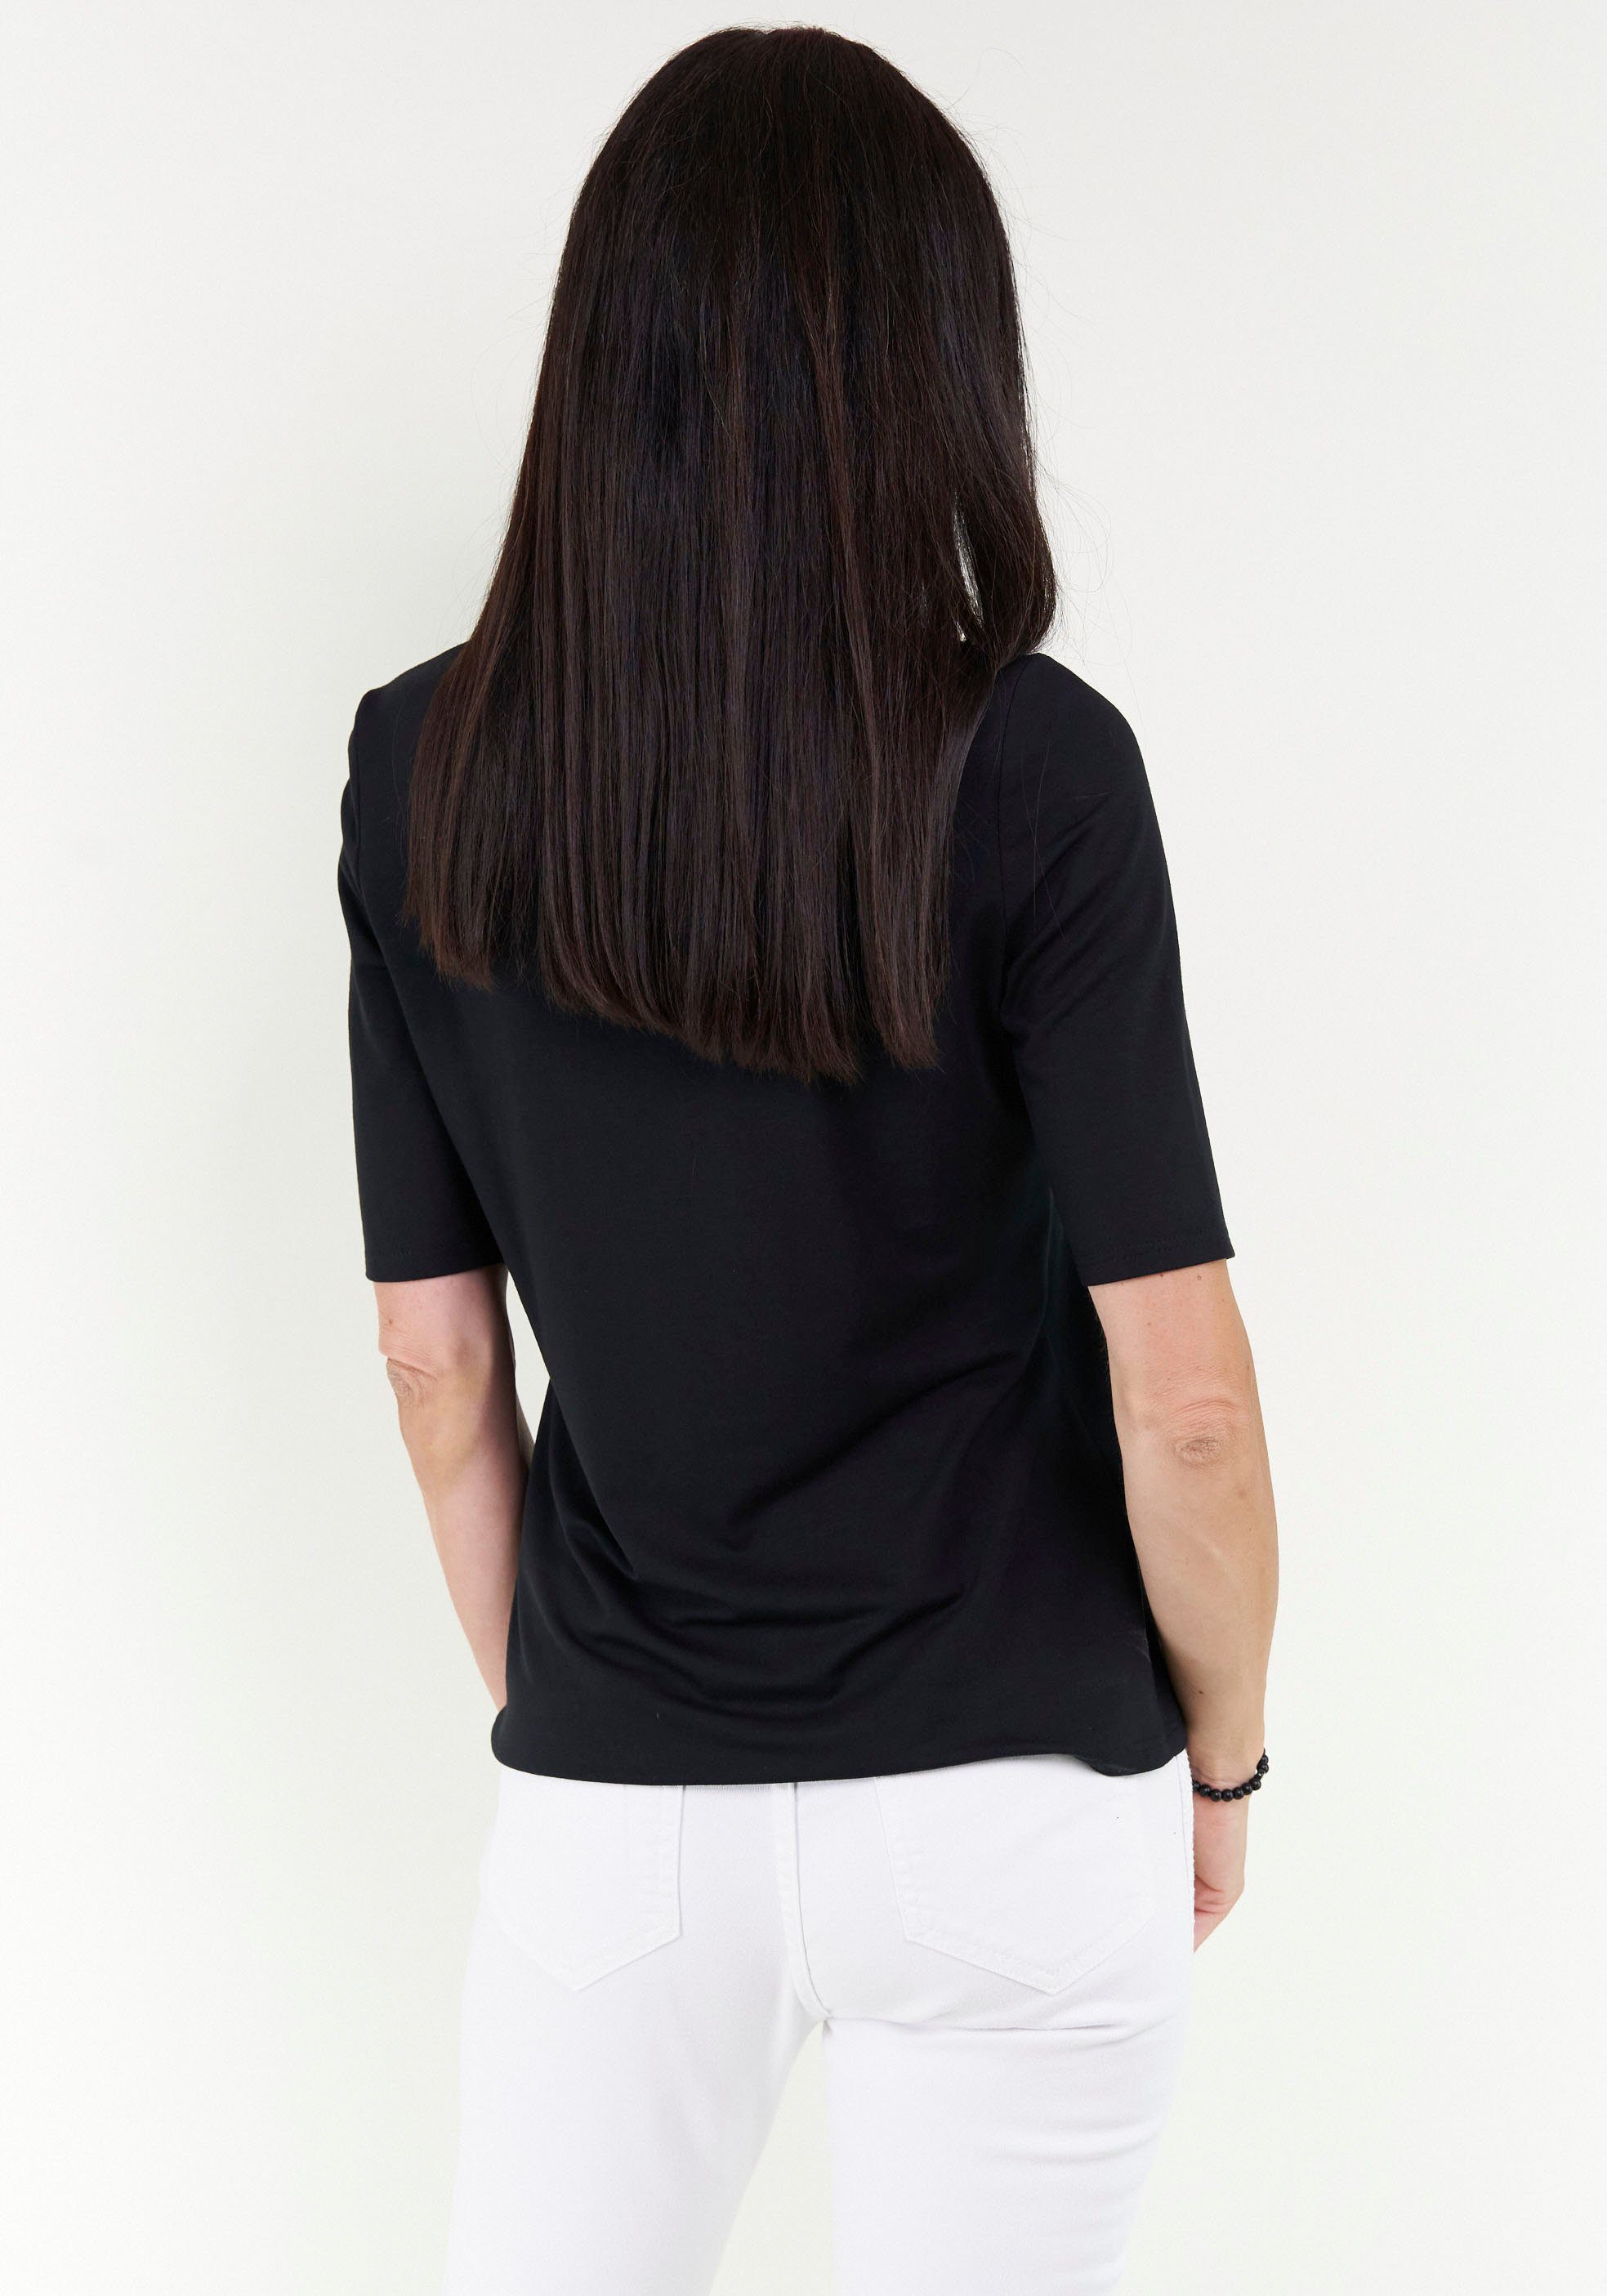 Seidel Moden V-Shirt aus IN Material, schwarz MADE softem GERMANY Halbarm mit